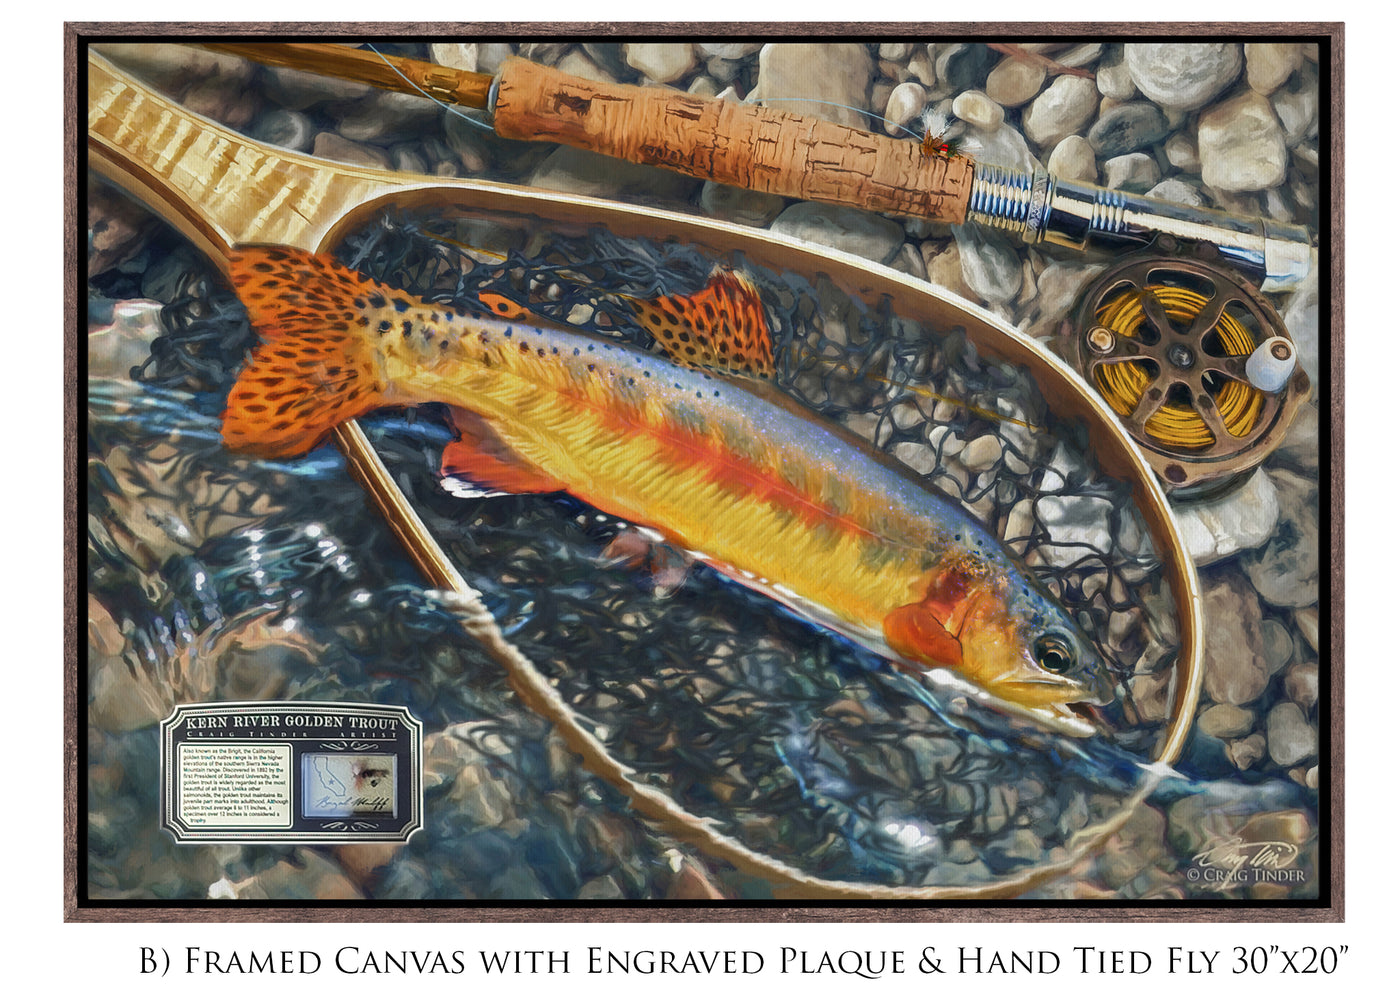 Kern River Golden Trout - Framed Canvas Shadowbox Art-Art Print-Aces In Action: The Workshop of Artist Craig Tinder